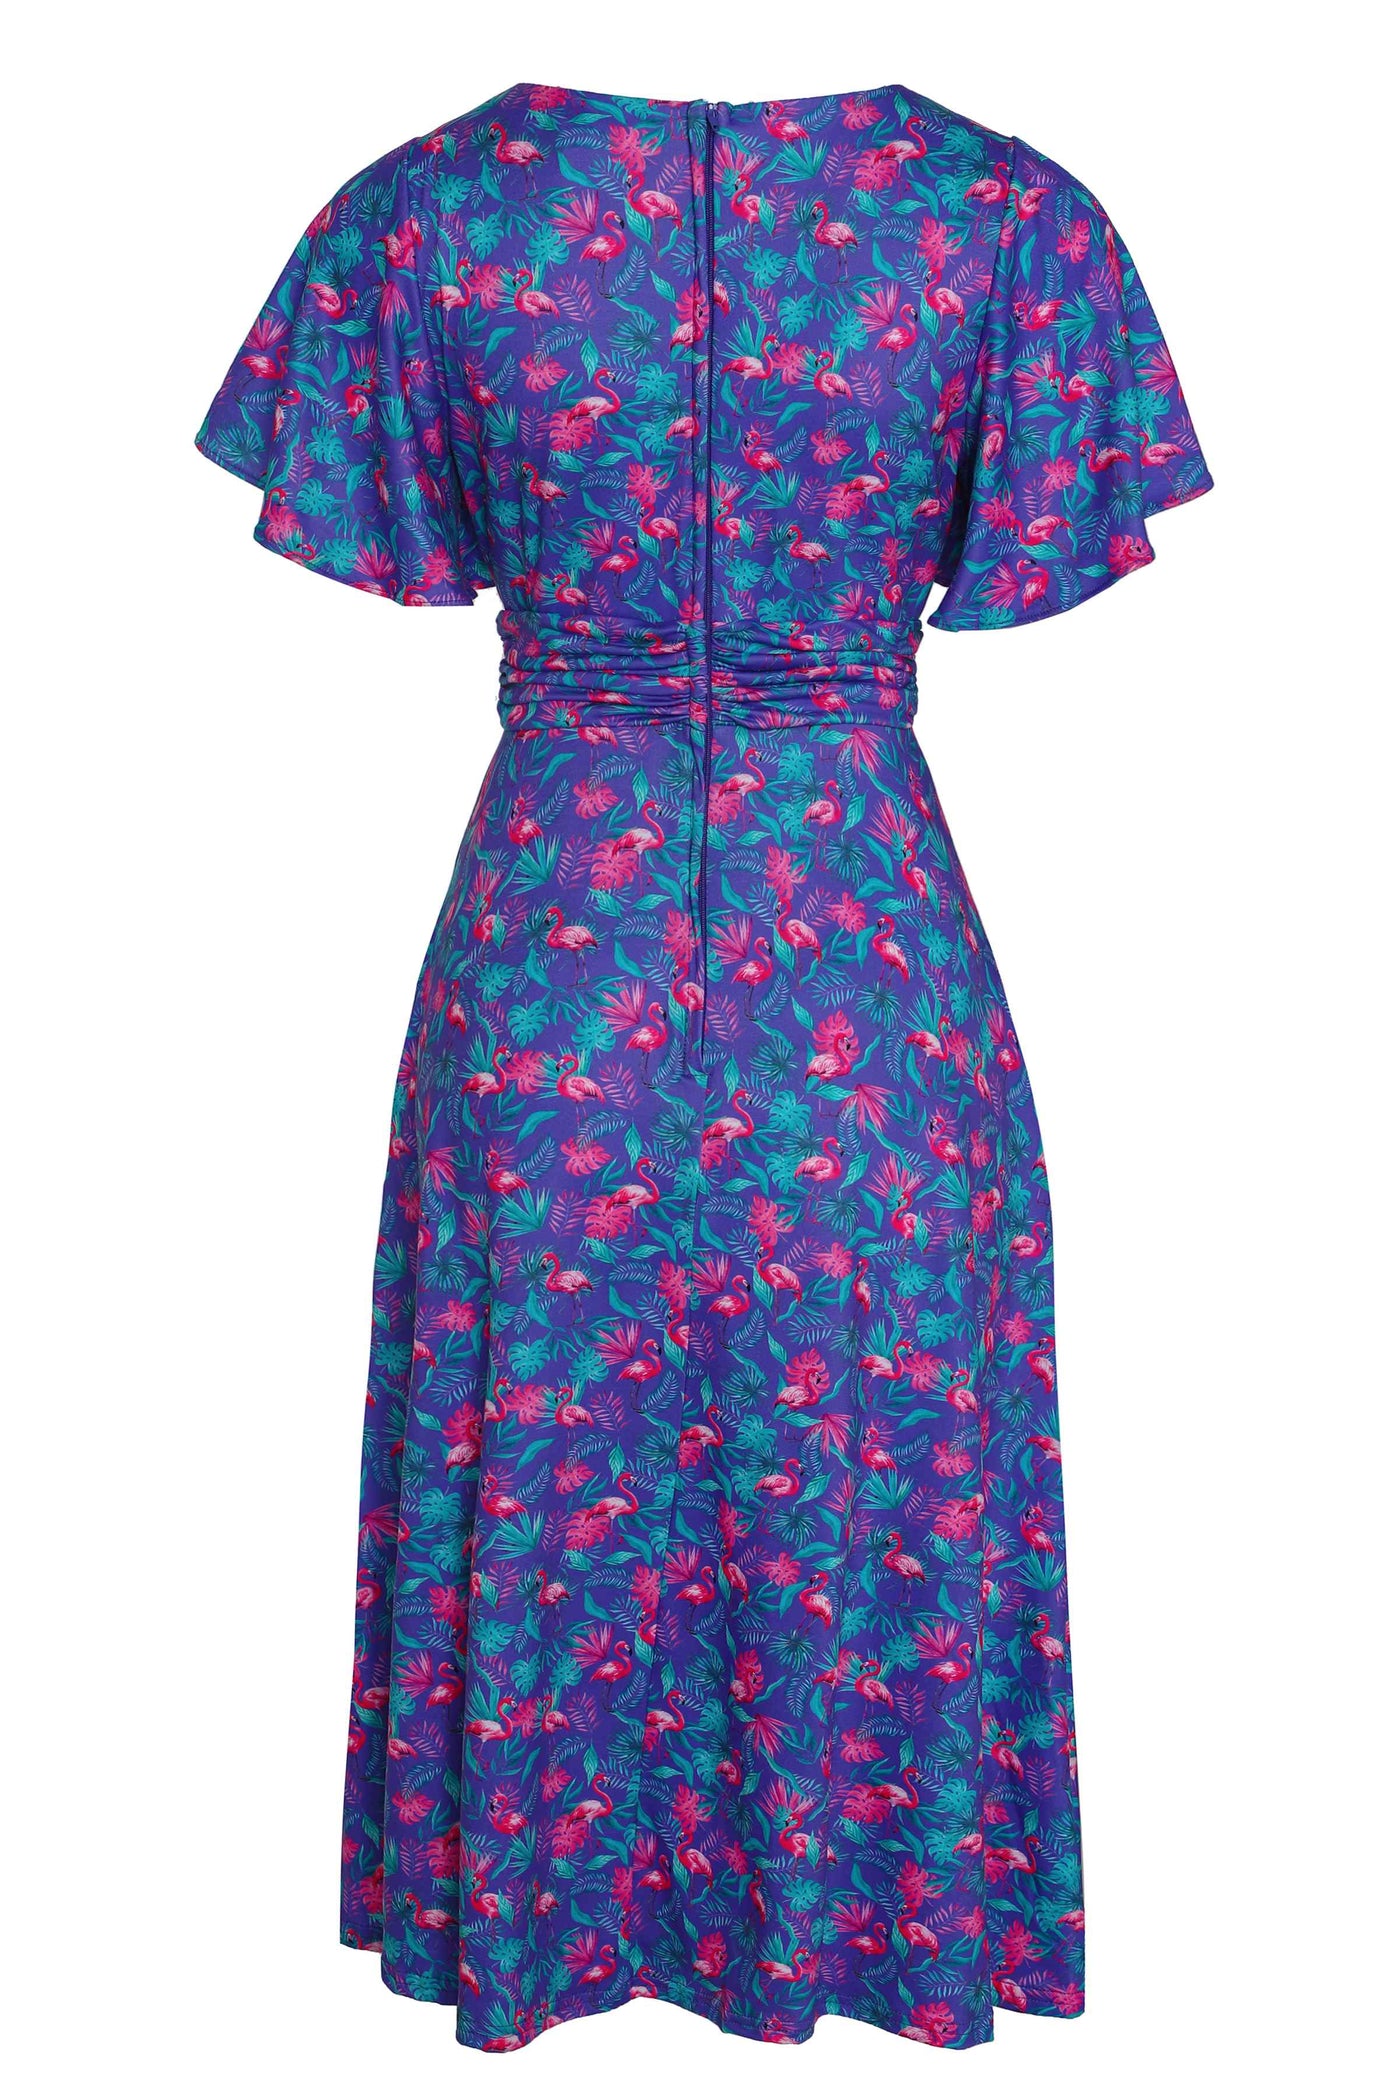 Back View of Flamingo Purple 50s Style Dress